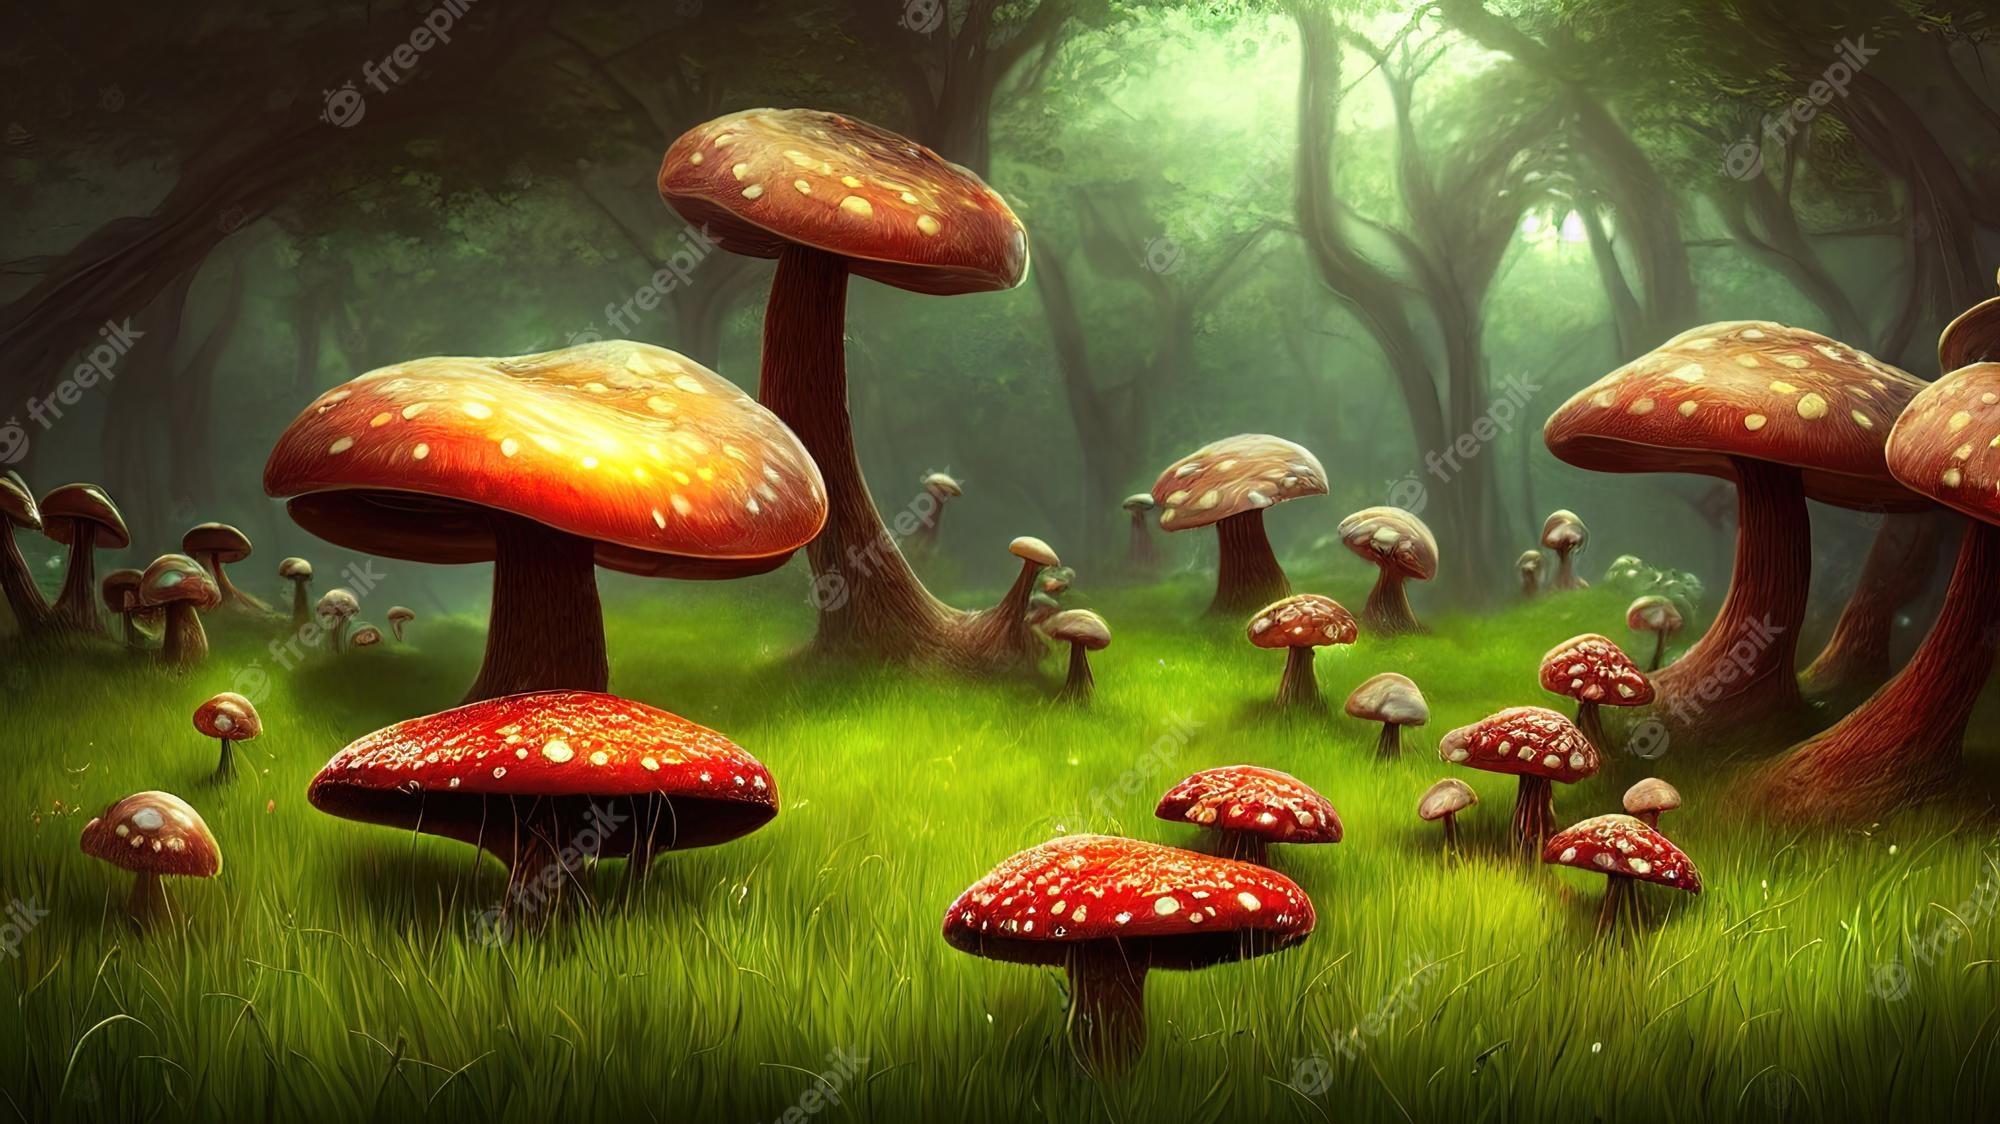 Premium Photo Fabulous Big Mushrooms In A Magical Forest Fantasy